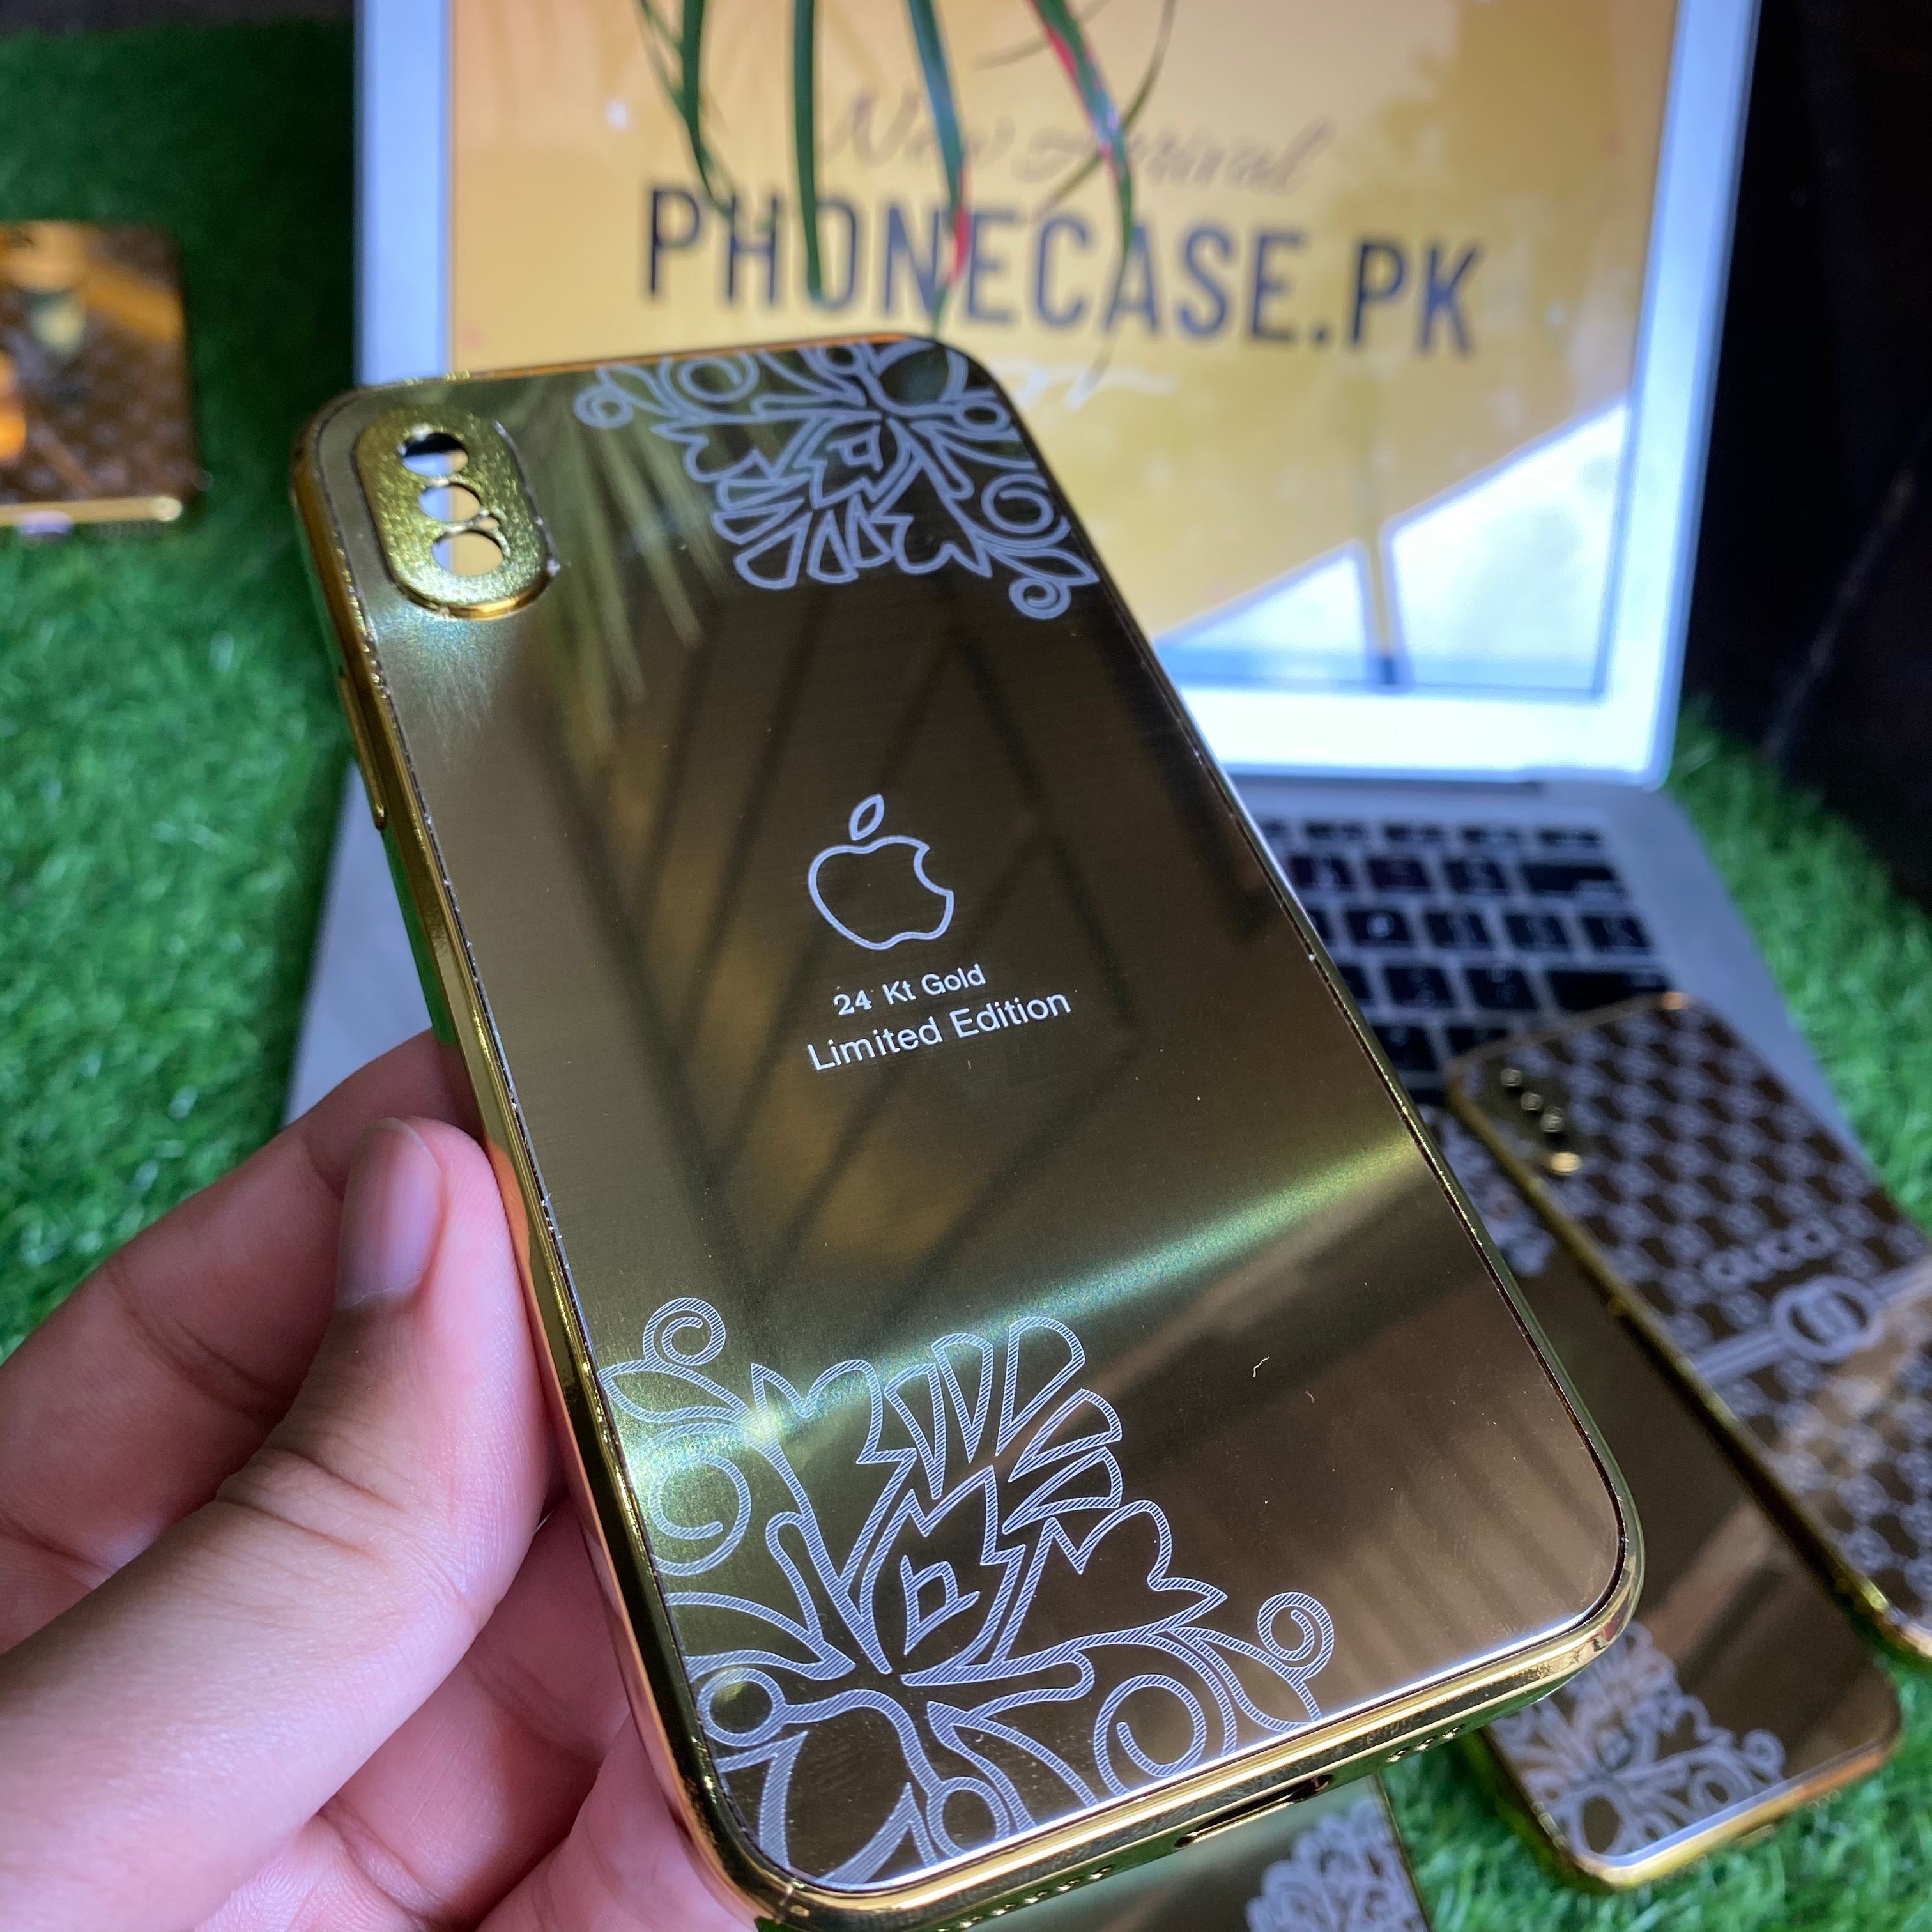 24KT ORIGNAL GOLD - Fancy Mobiles Covers In Pakistan